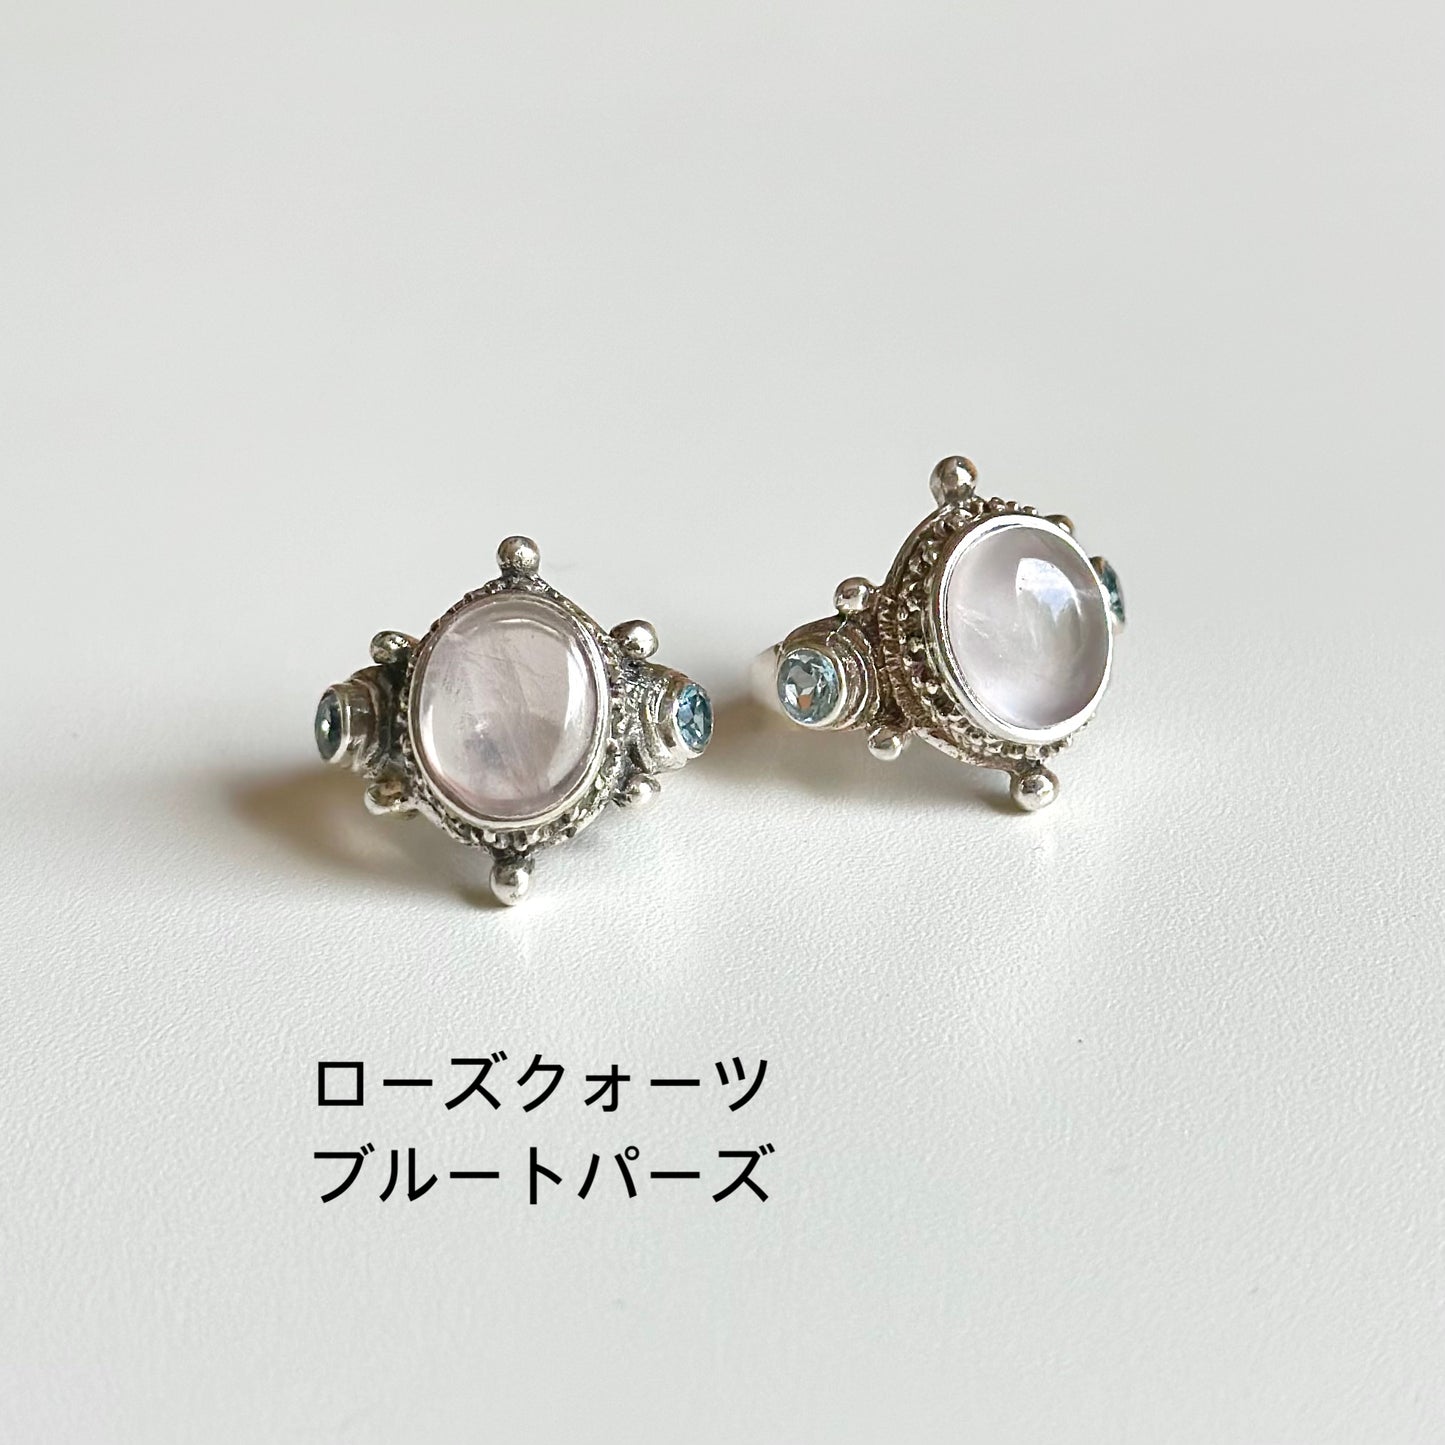 Silver925 design ring 11